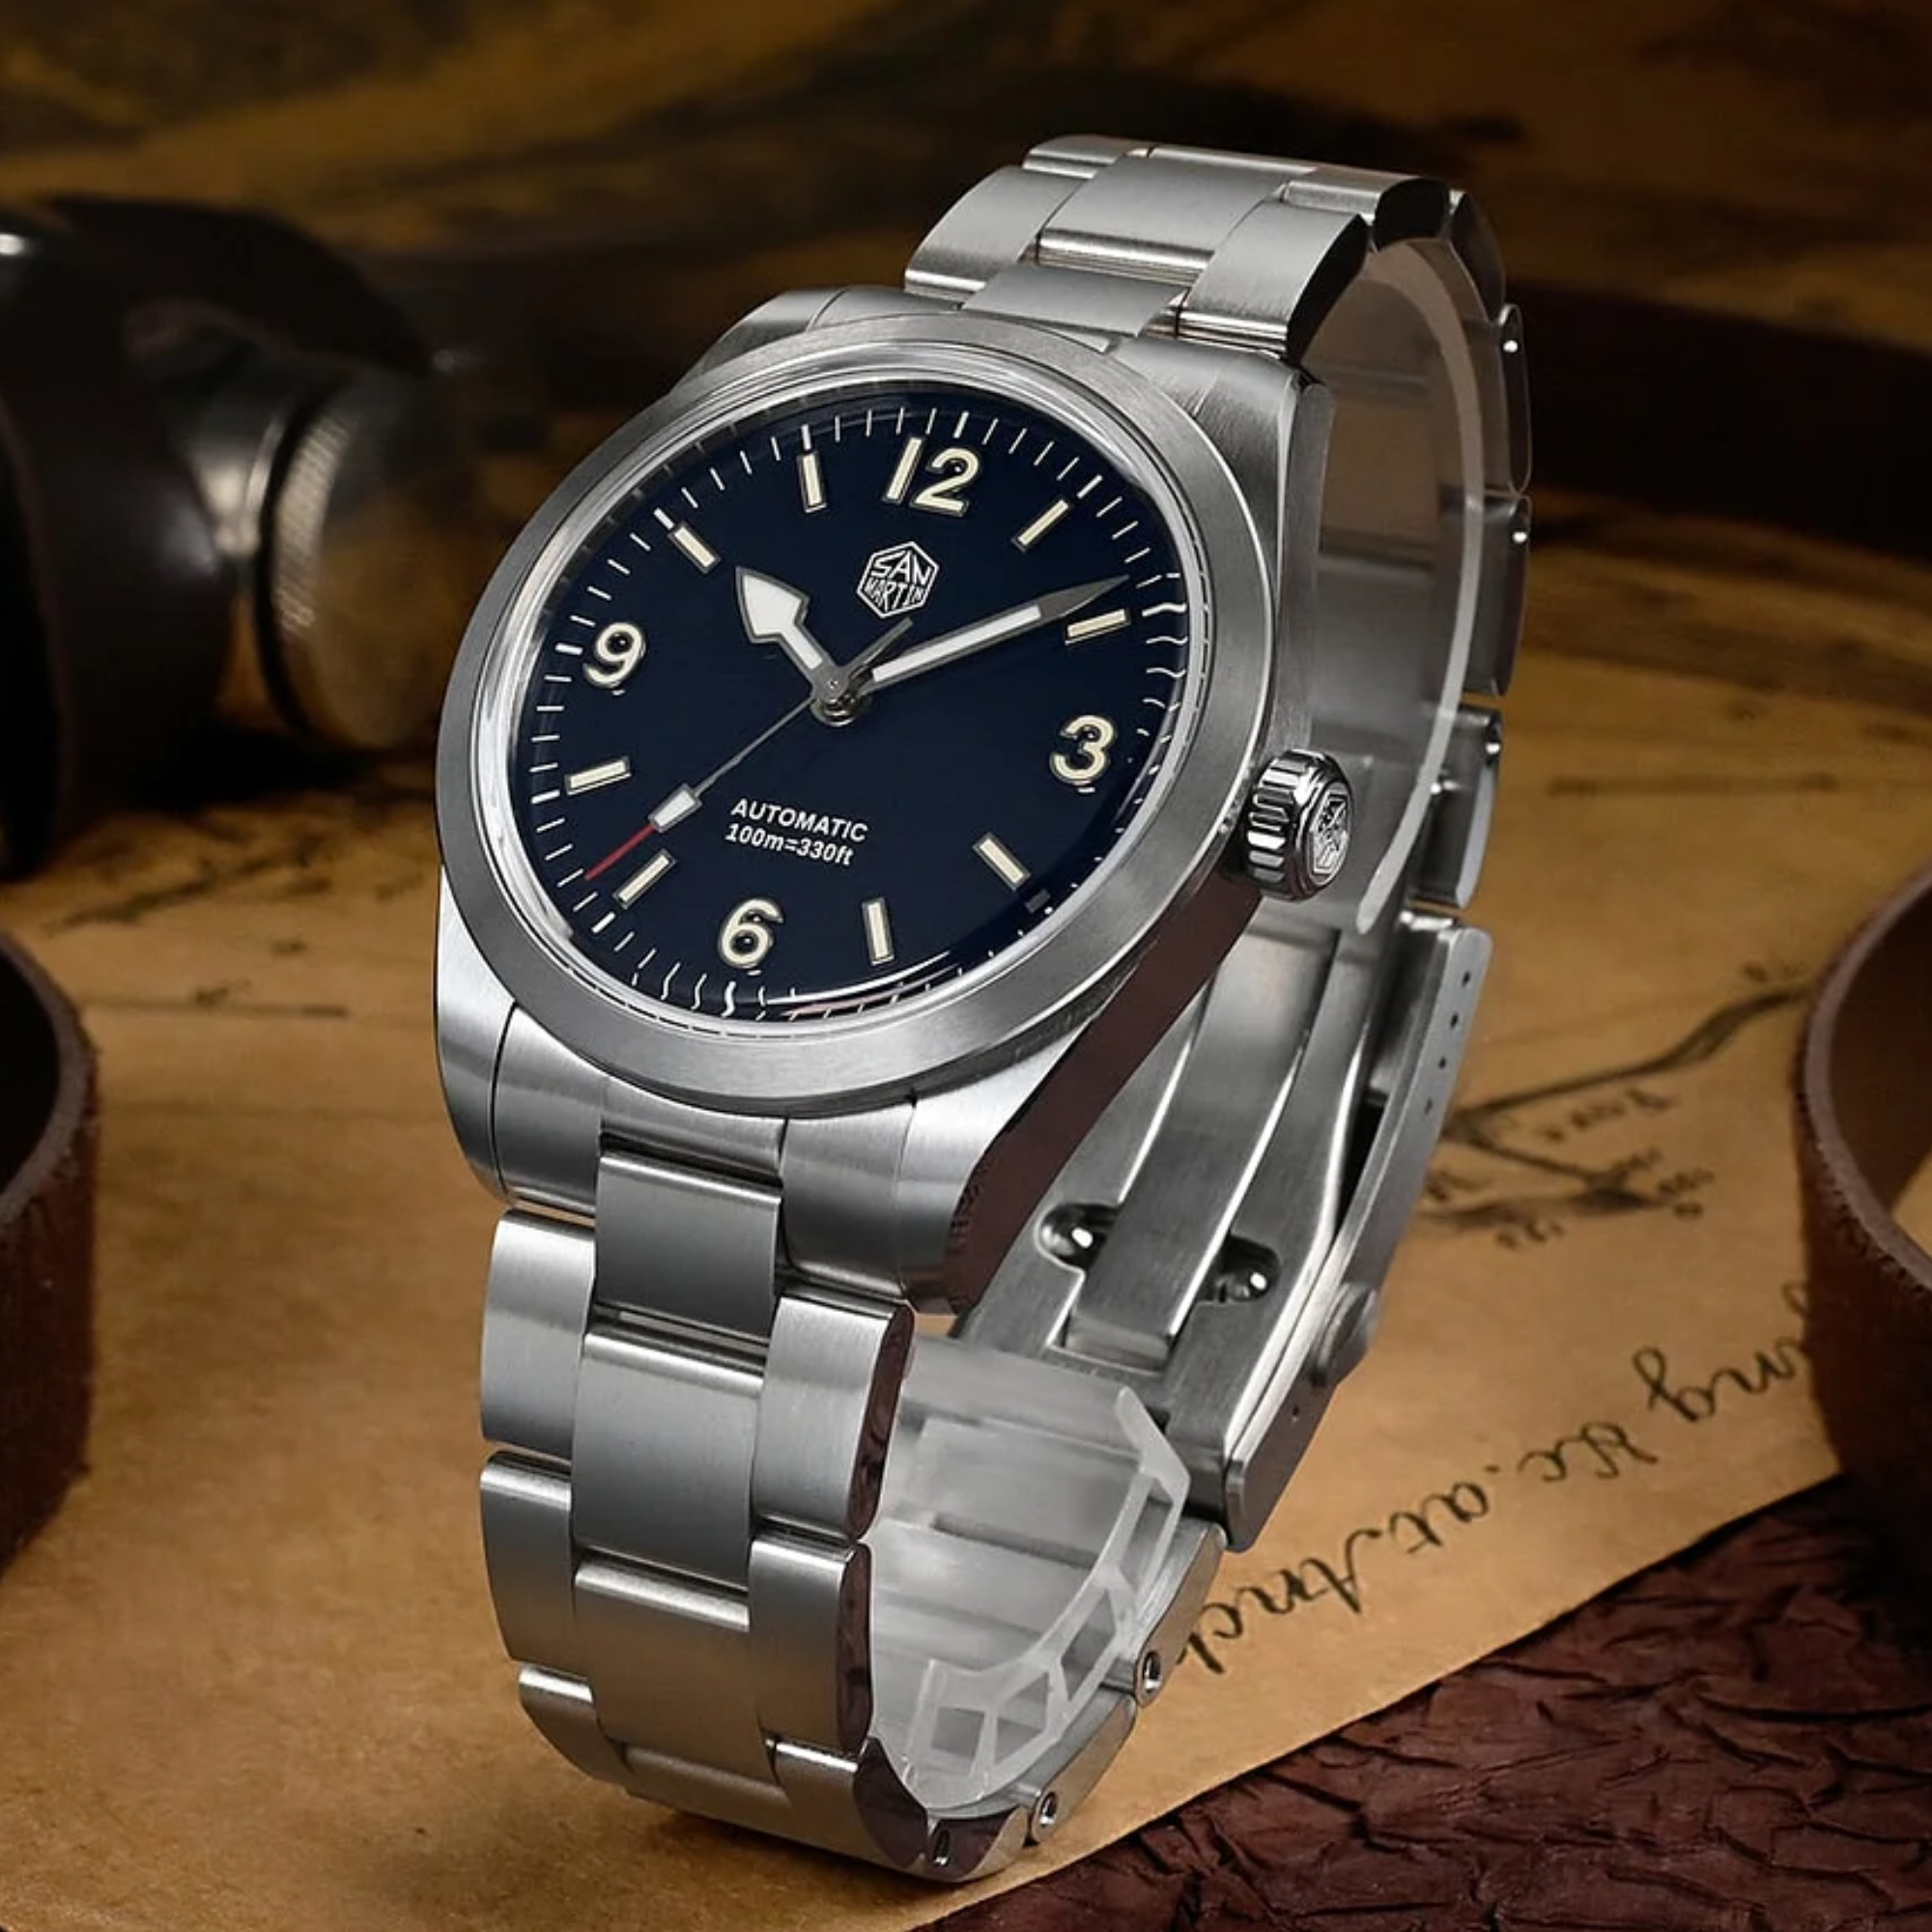 San Martin 38mm Enamel Dial Explore Watch SN0107-G4 - Blue san martin watches india online